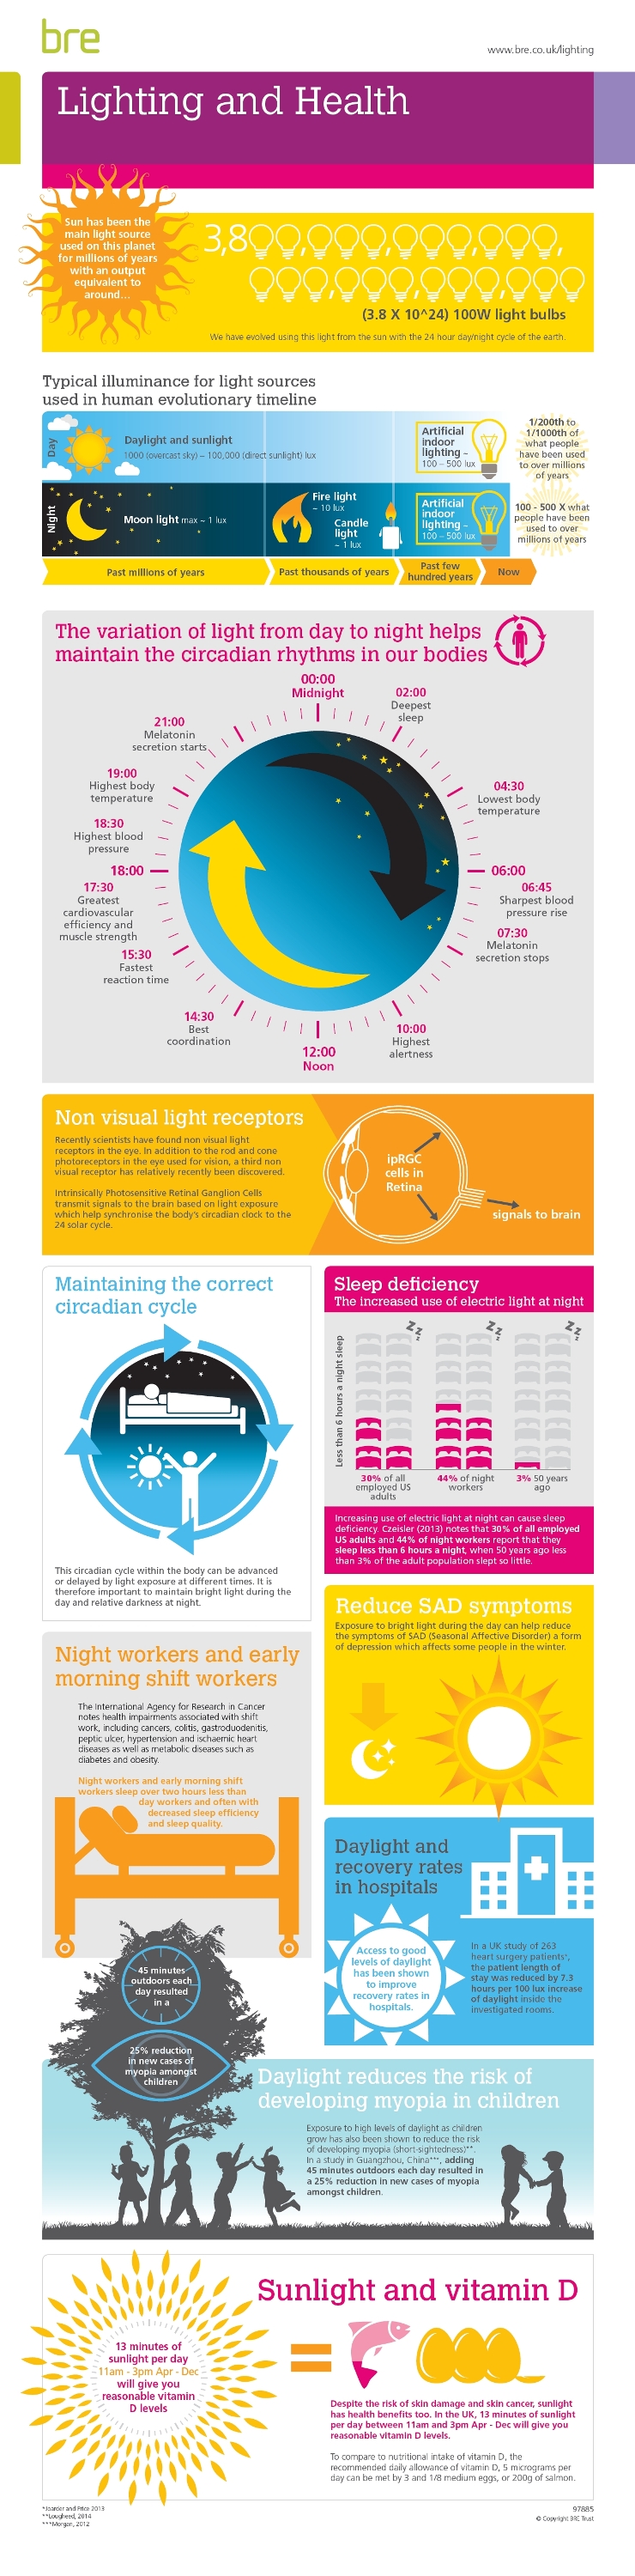 Lighting and health infographic.jpg